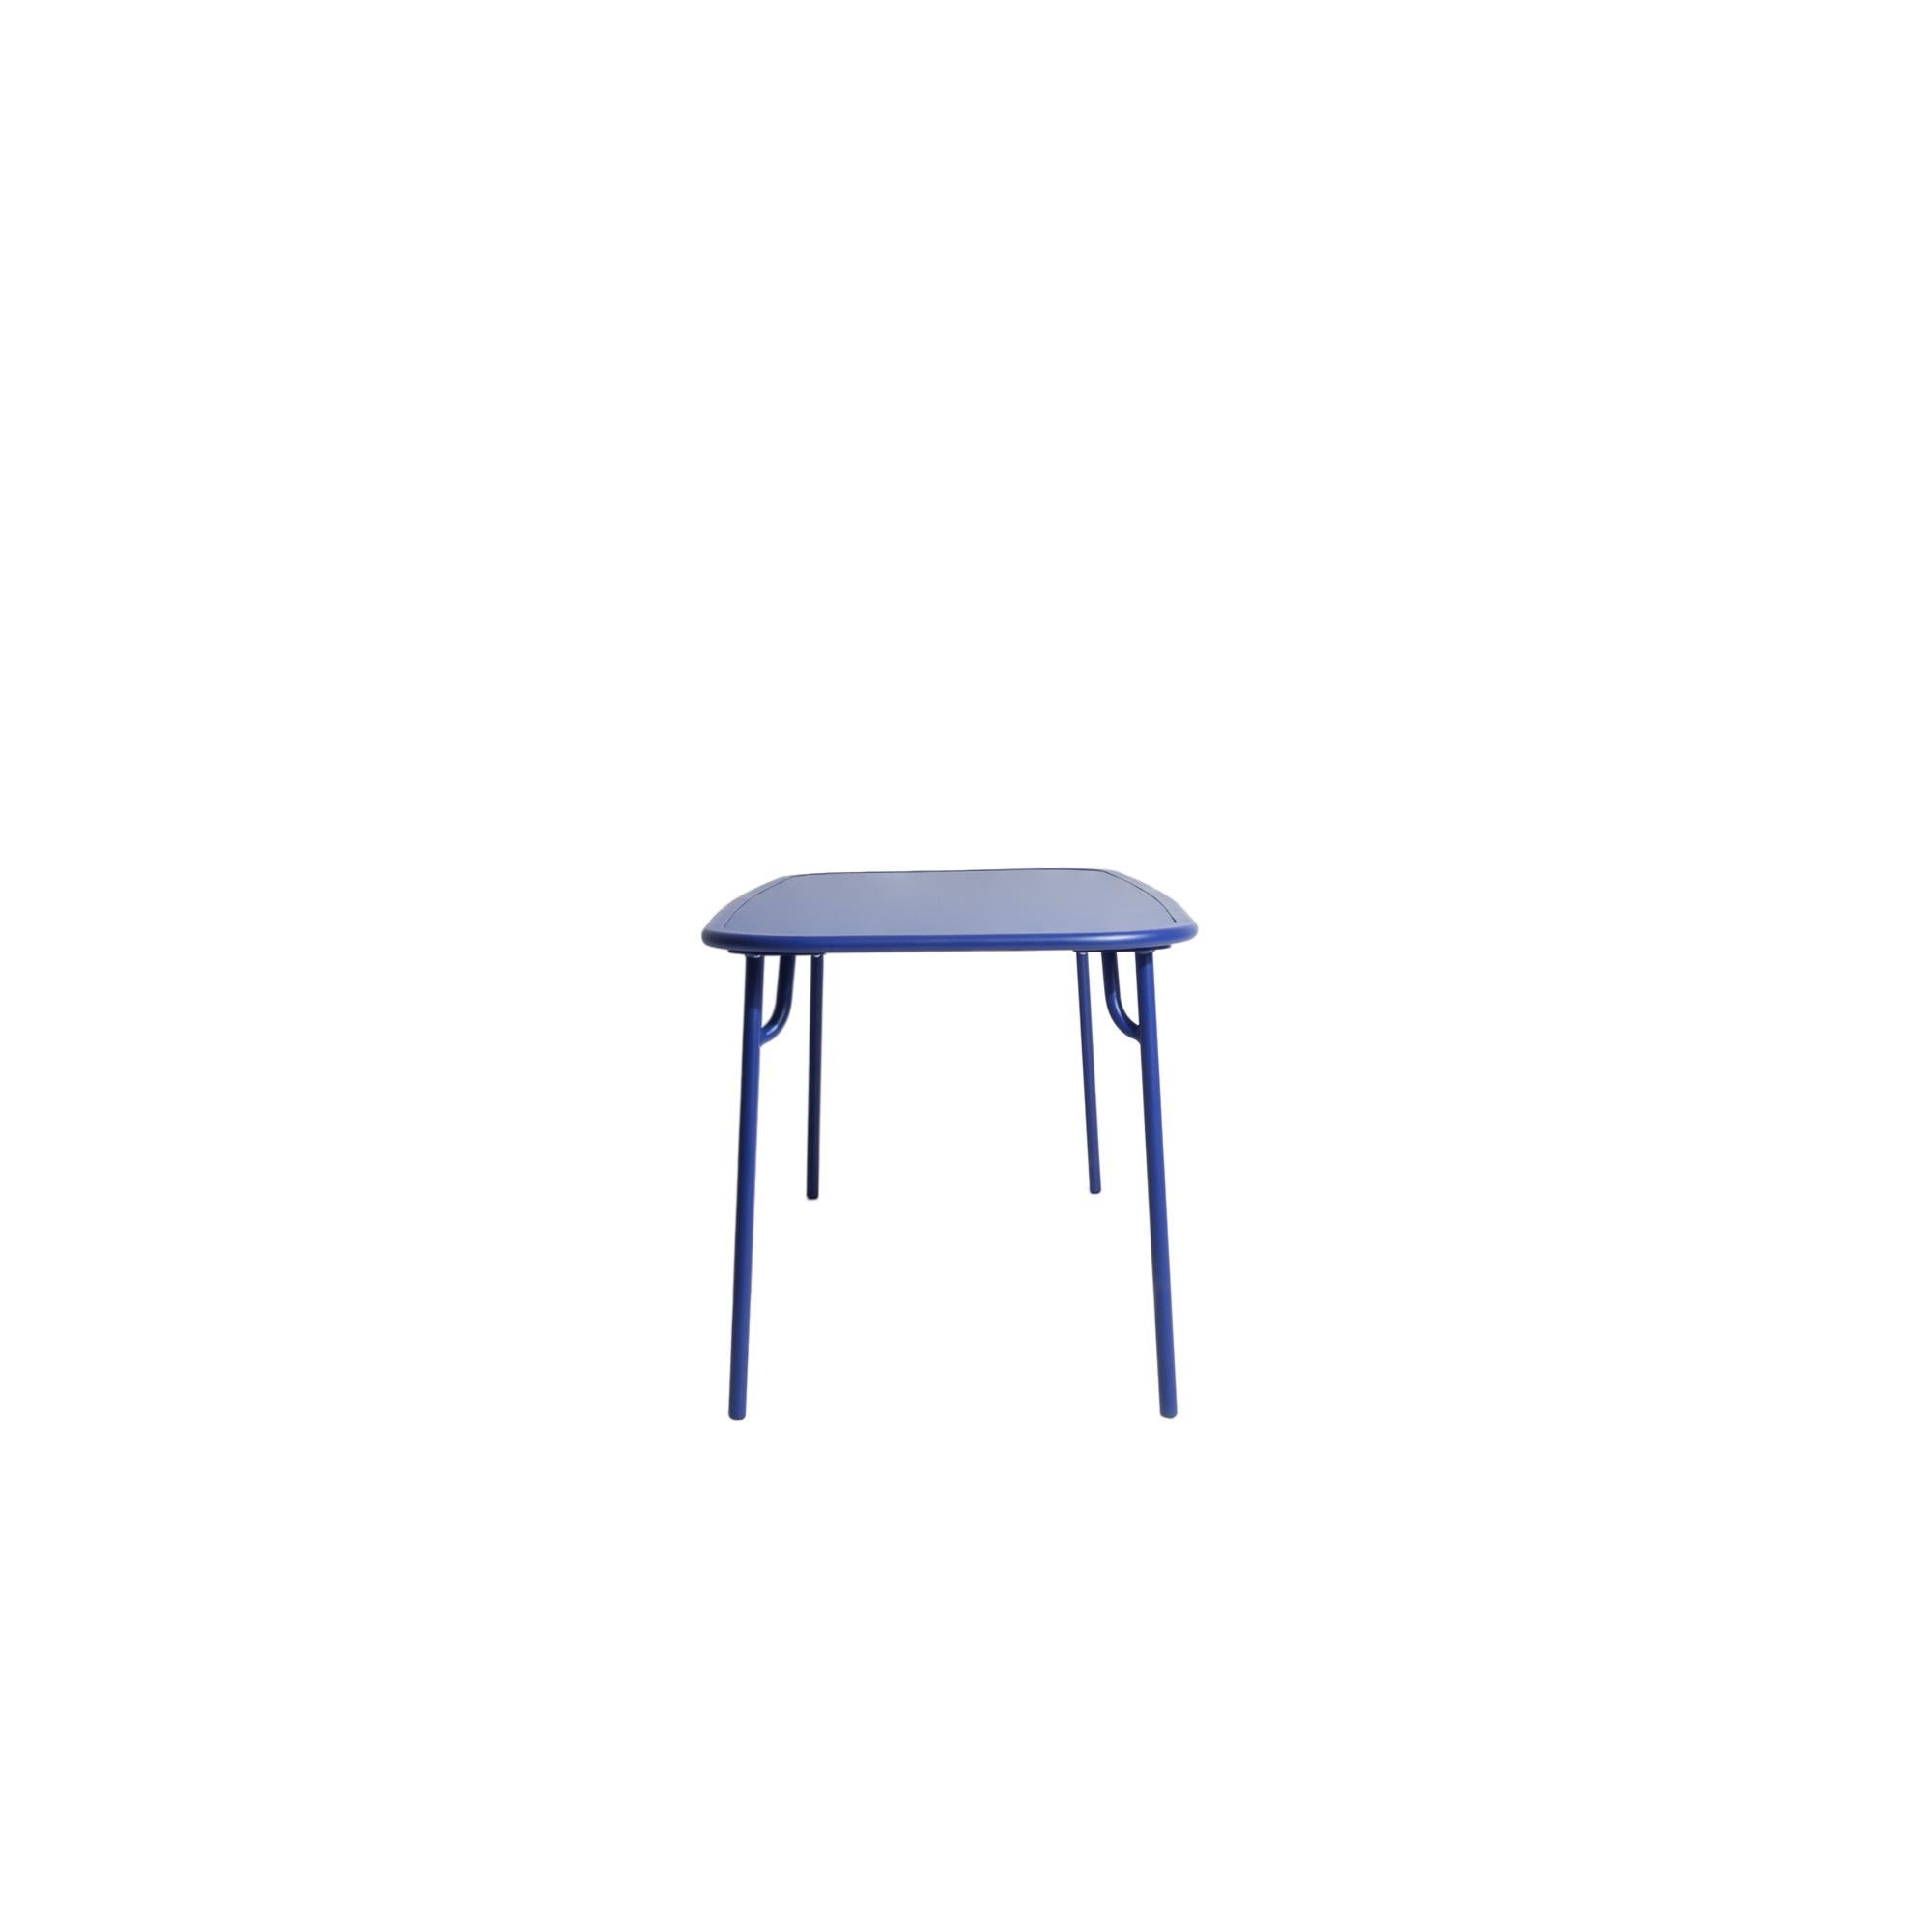 Chinese Petite Friture Week-End Medium Plain Rectangular Dining Table in Blue Aluminium For Sale